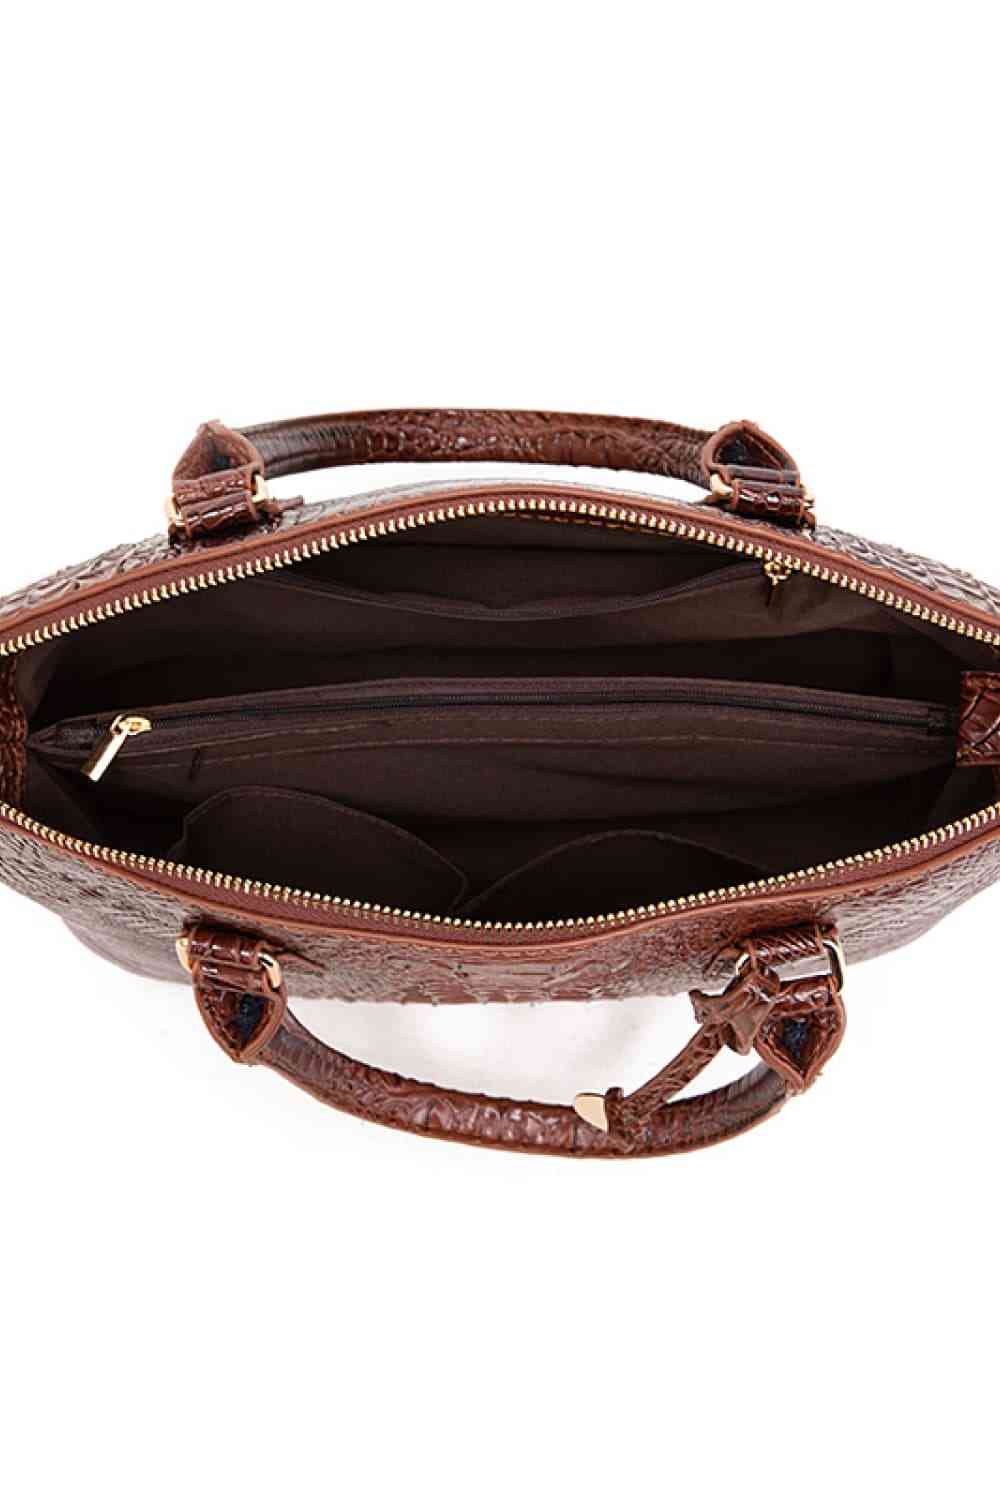 TEEK - Scheduled Style Handbag BAG TEEK Trend   